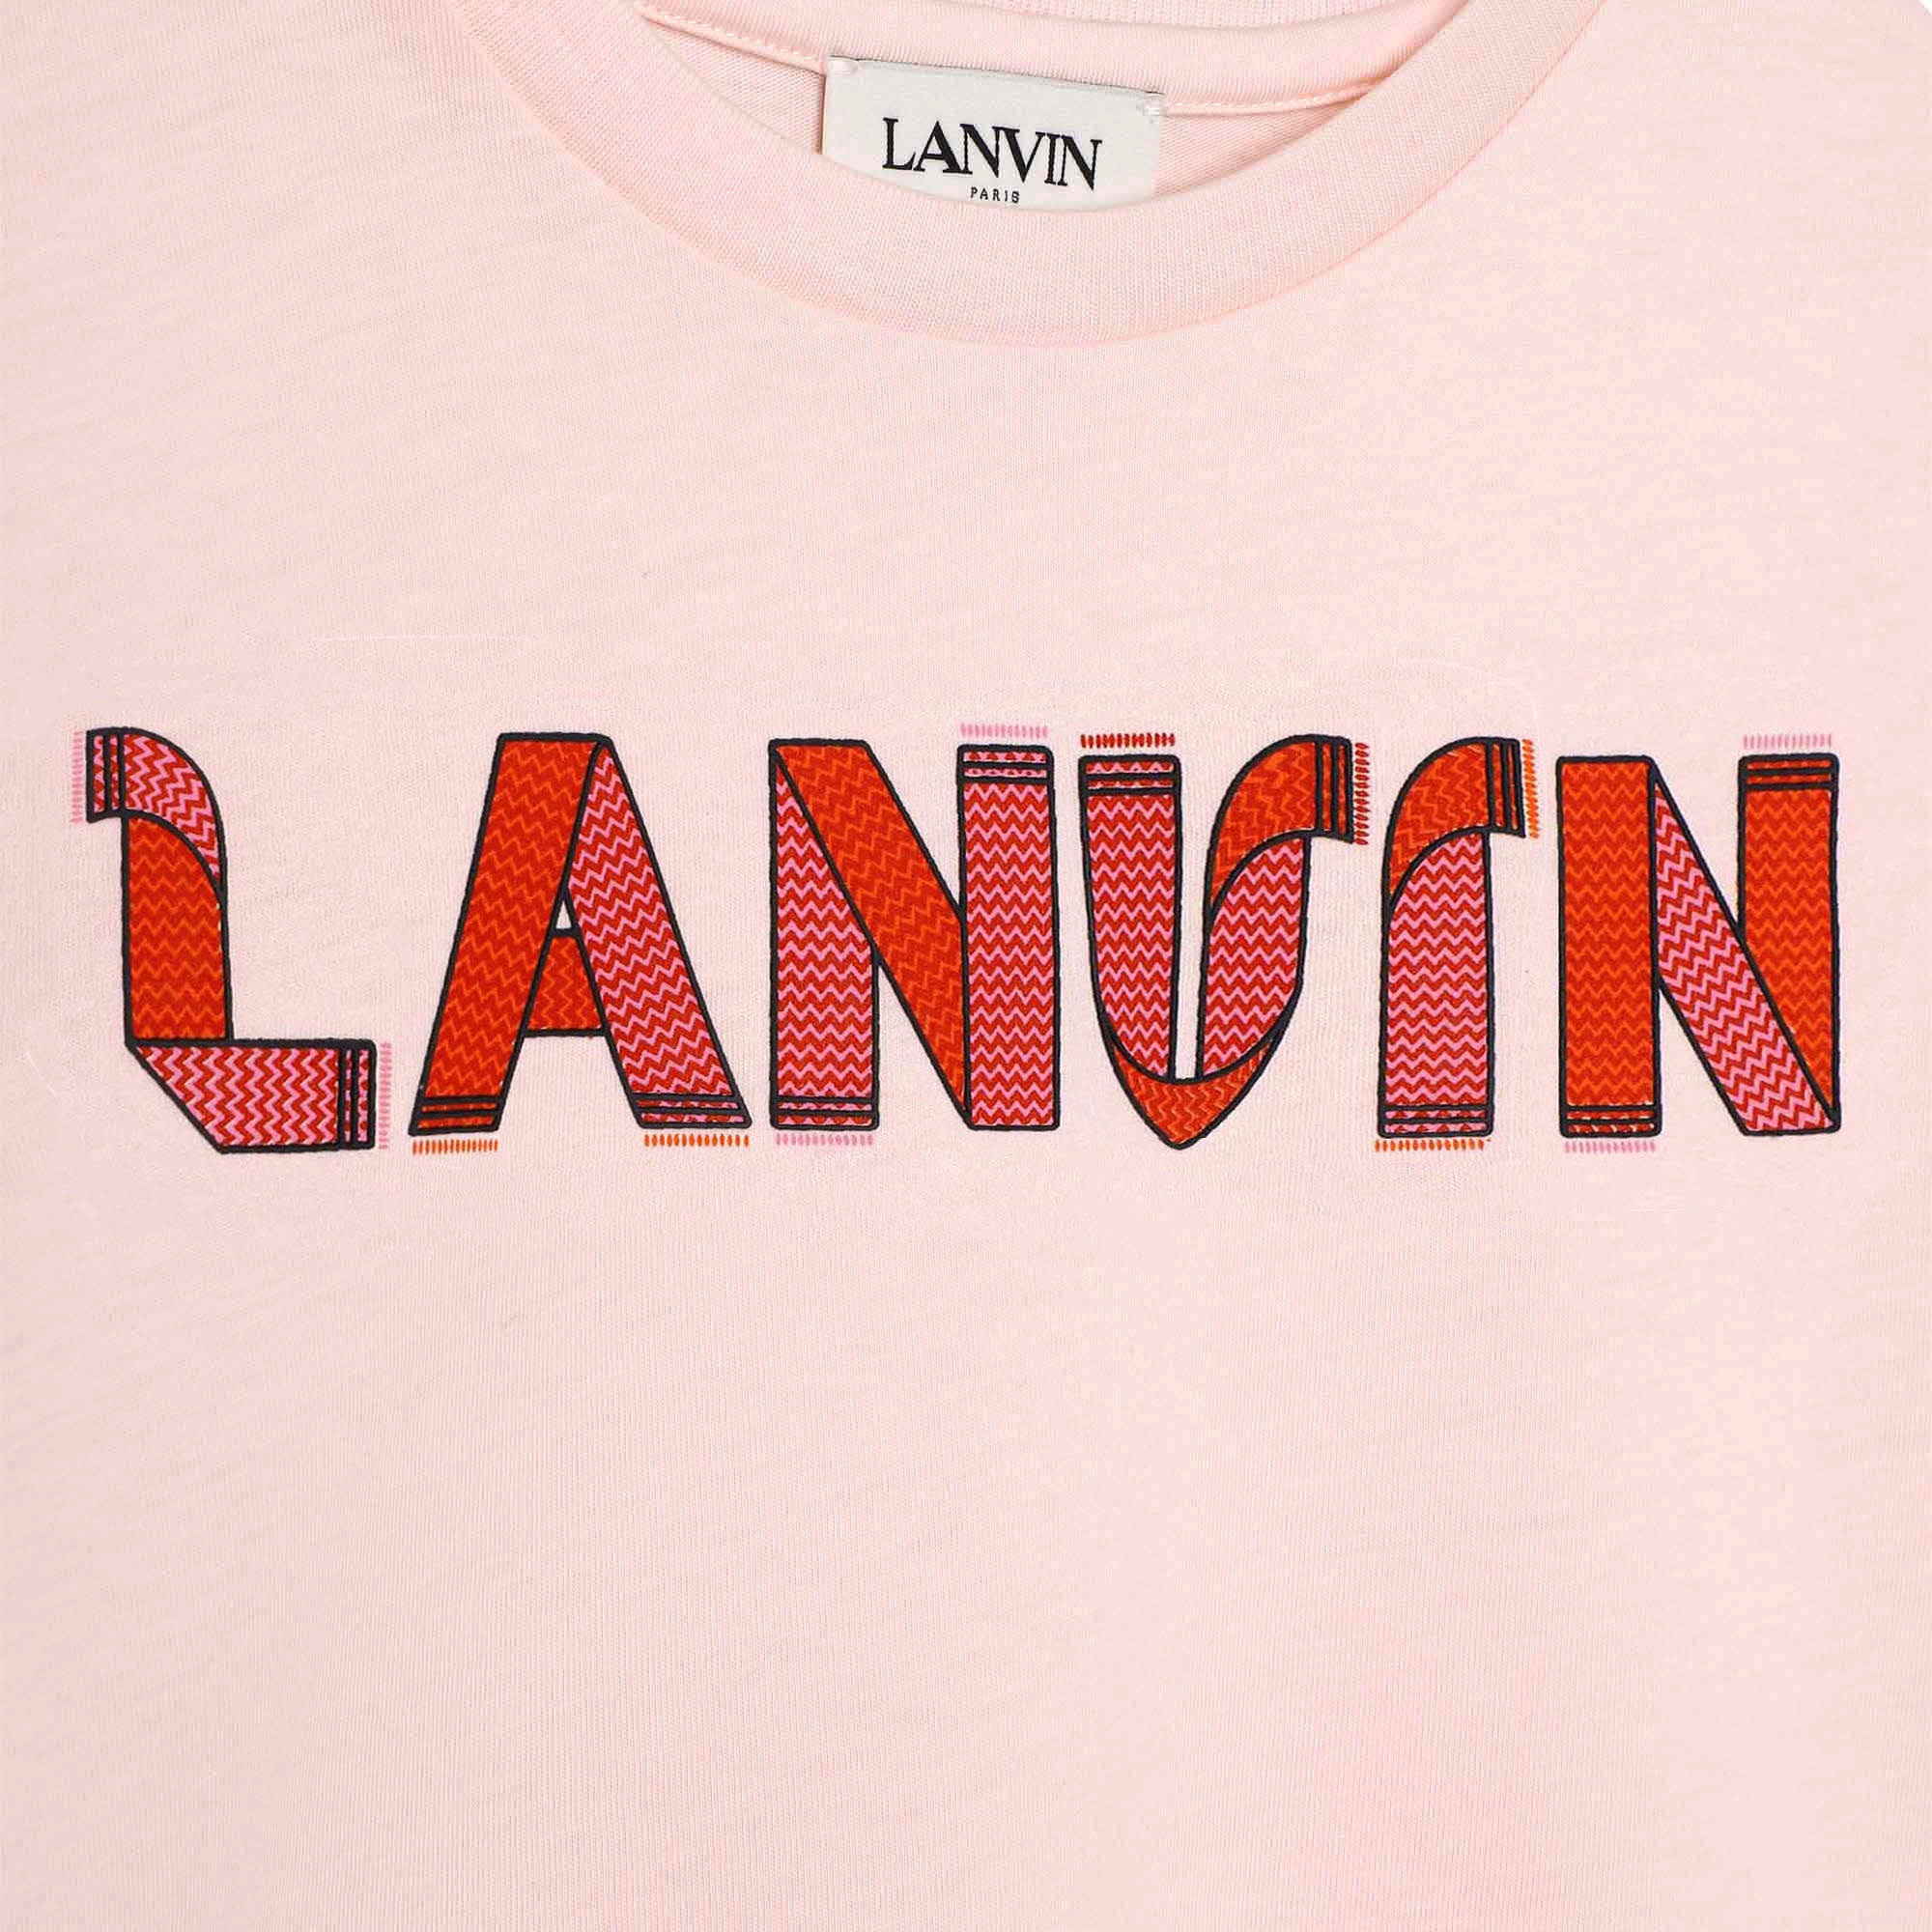 T-shirt stampa nastro LANVIN Per BAMBINA